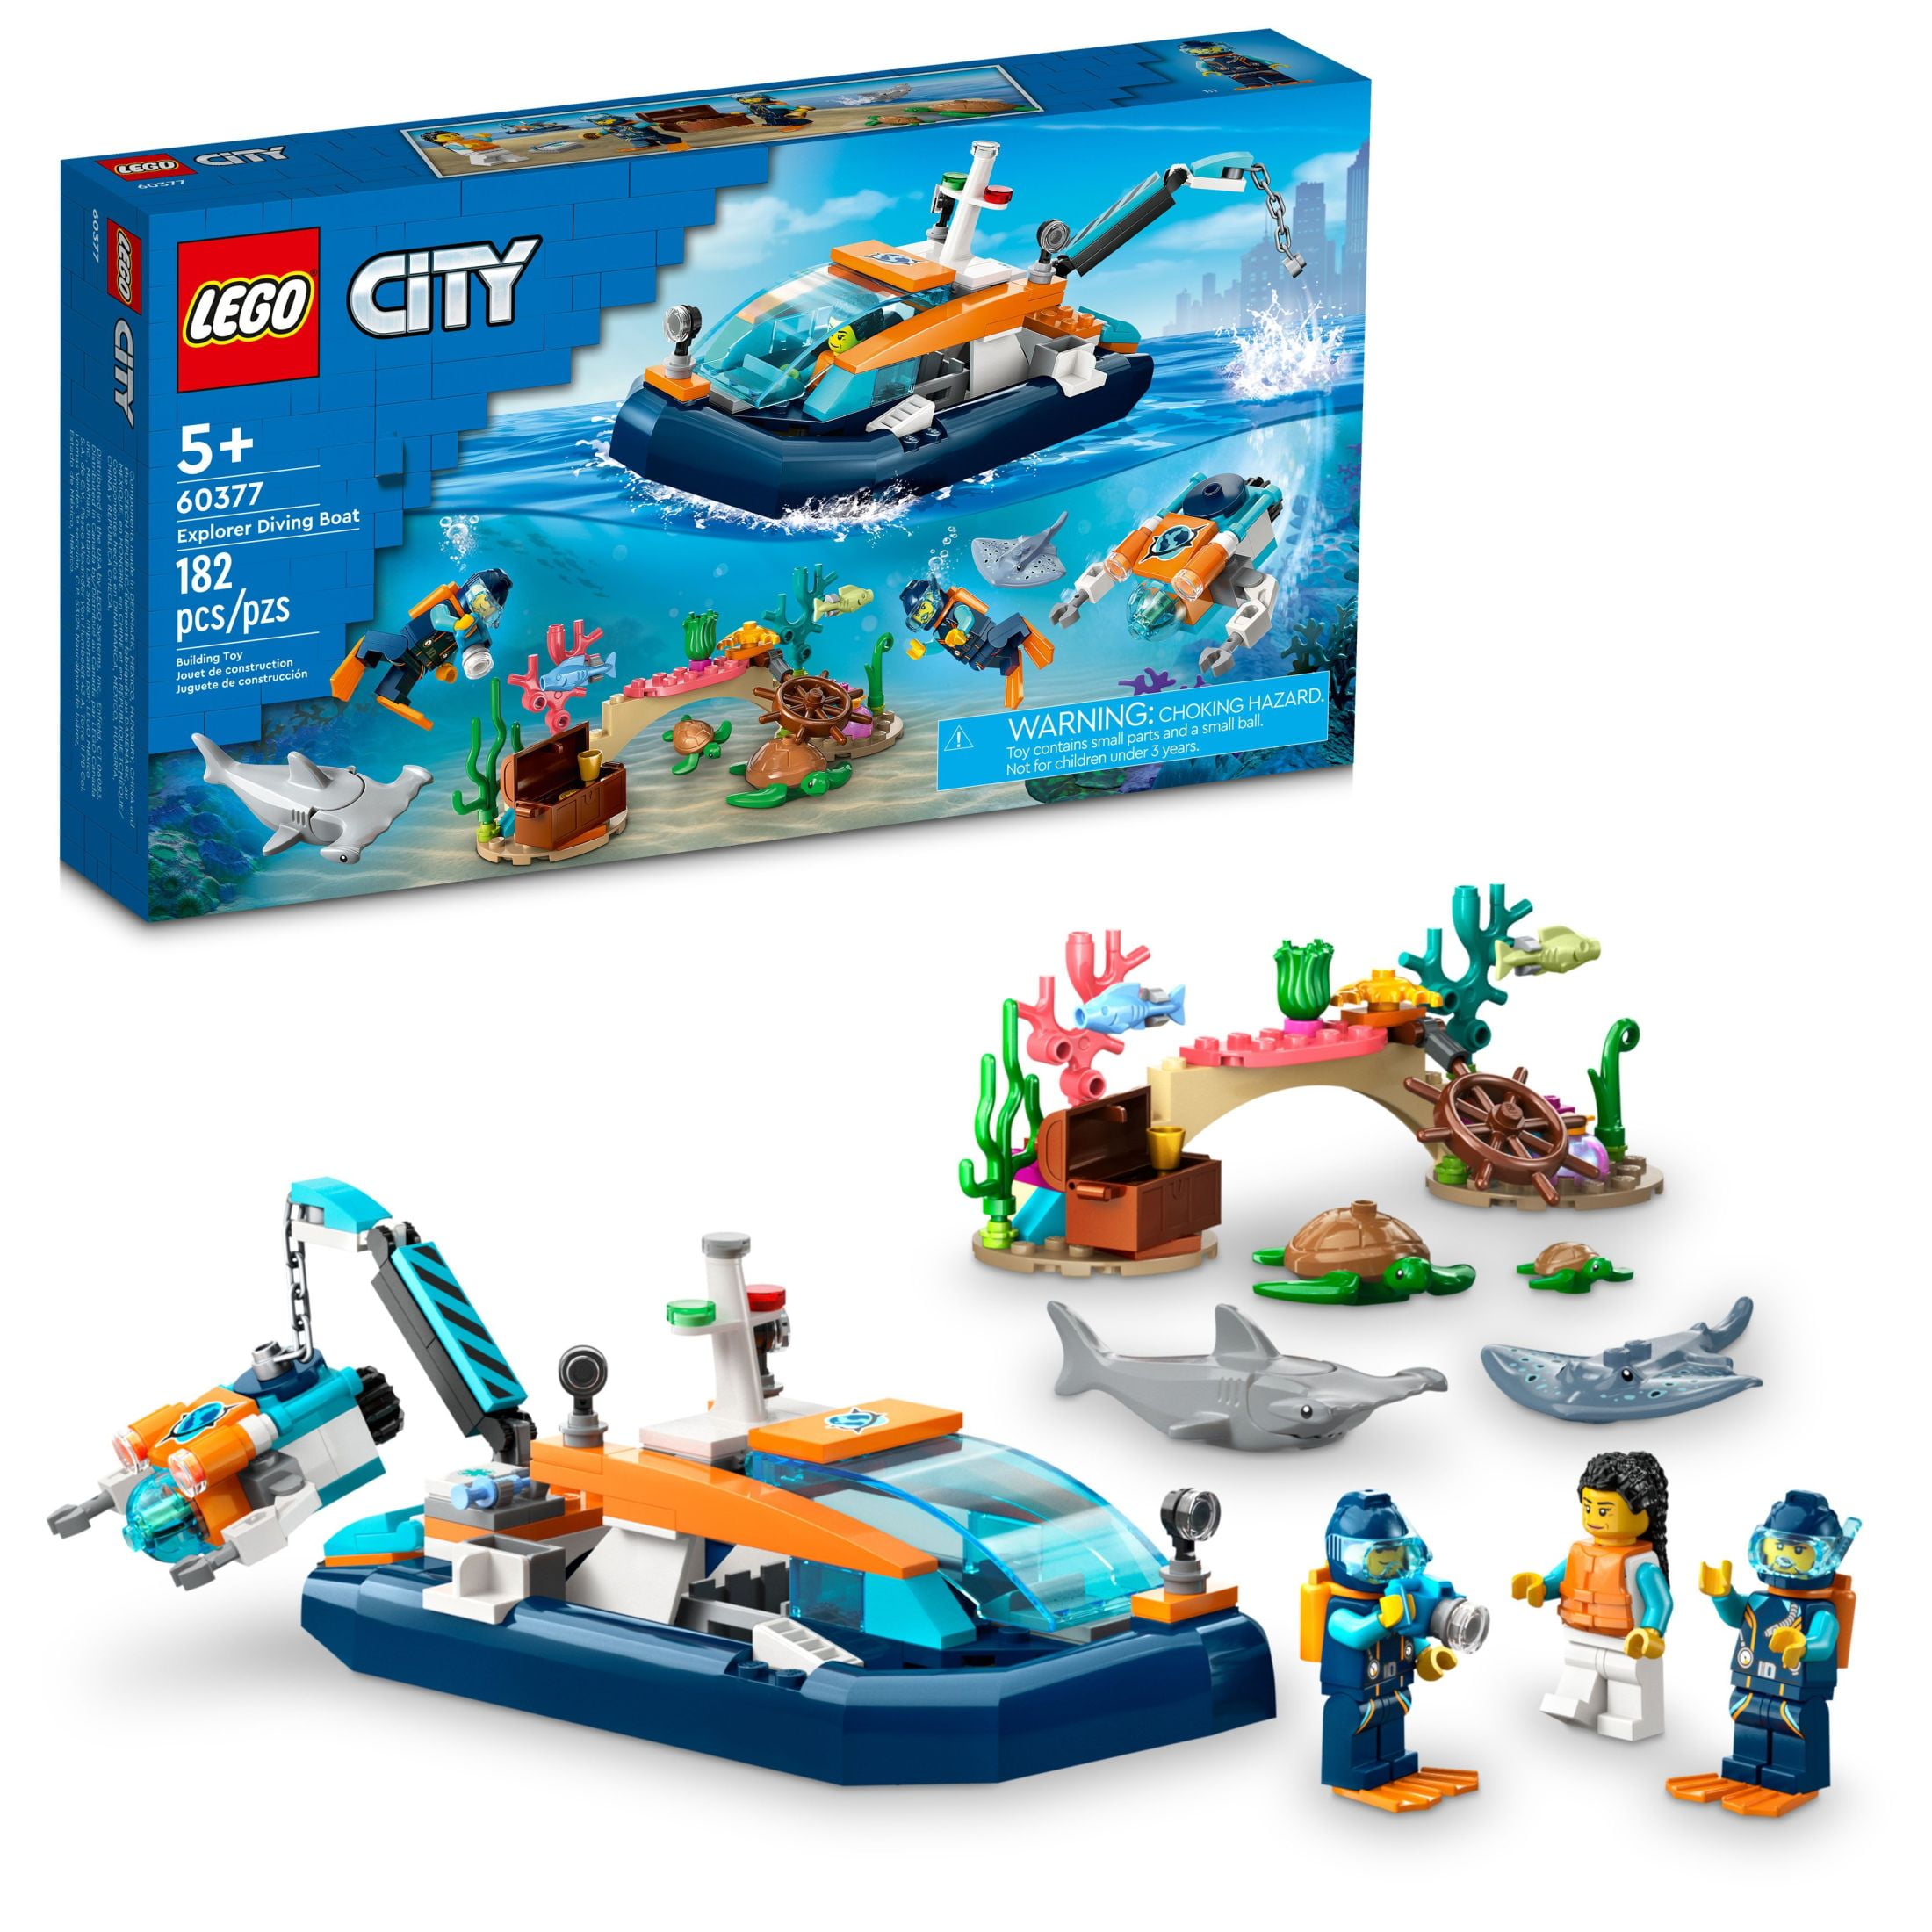 Lego 60377 - City Explorer Diving Boat